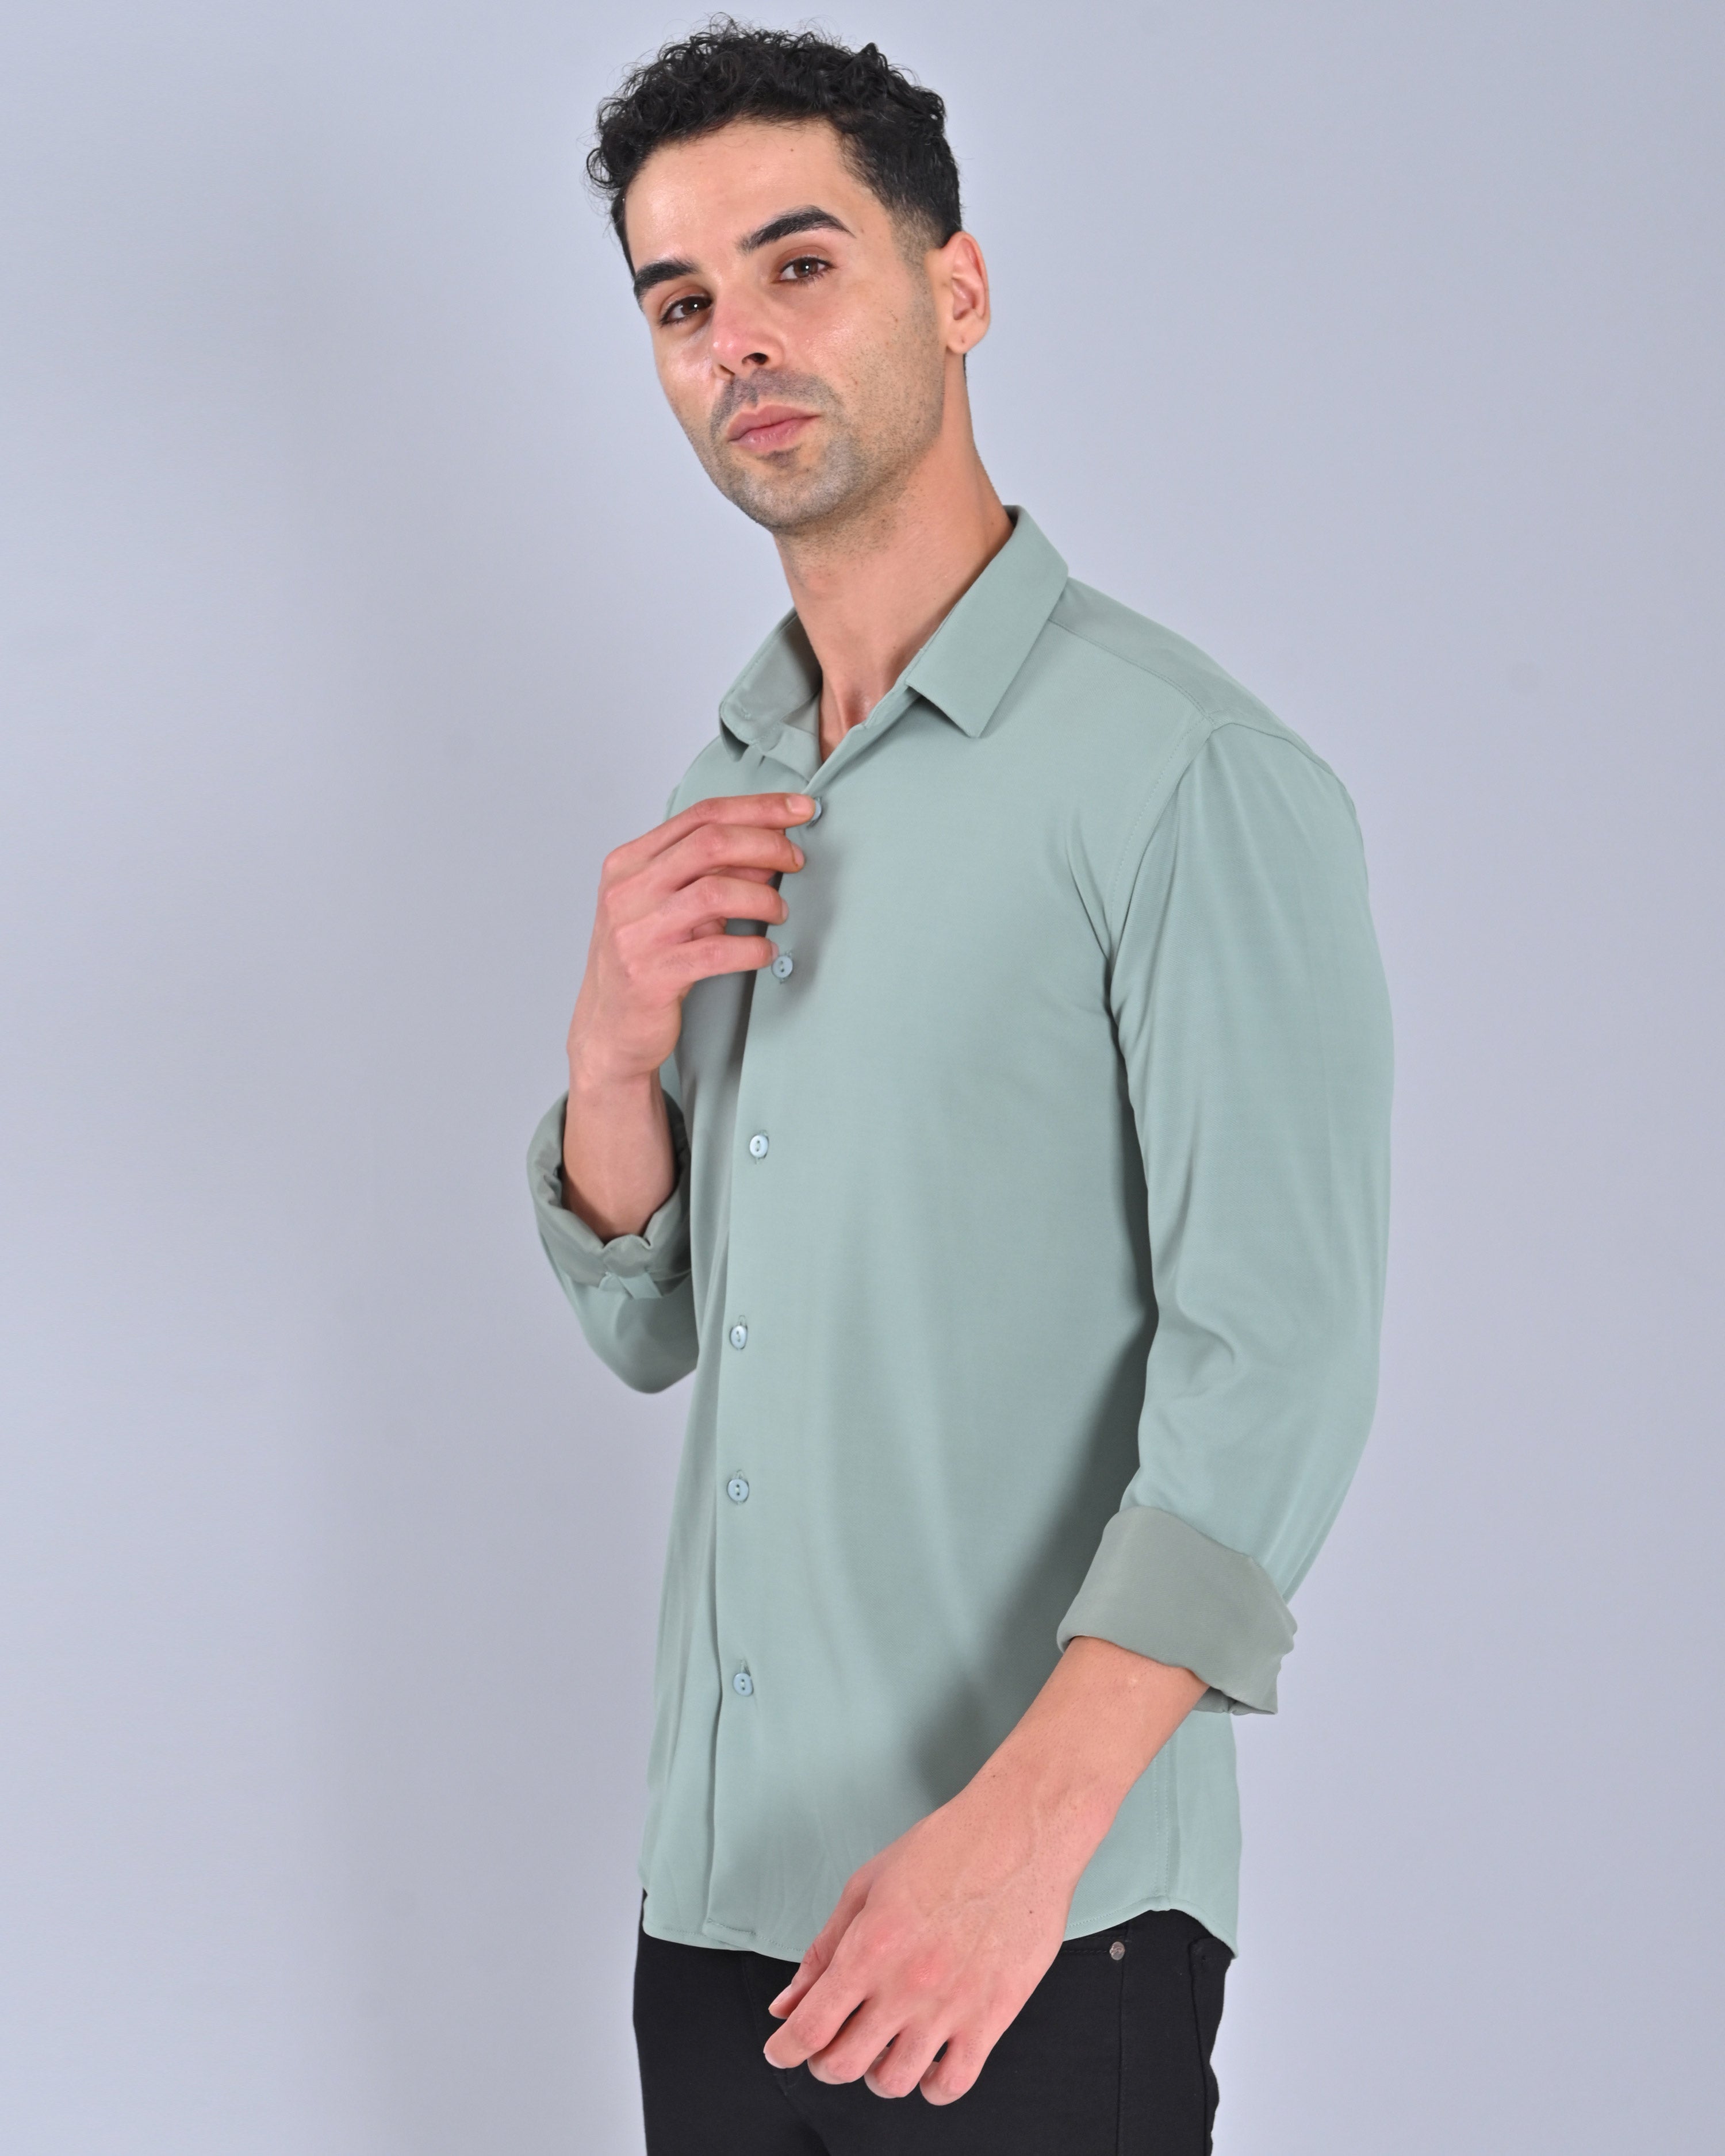 Buy Men's Solid Light Blue Cross Knit Shirt Online